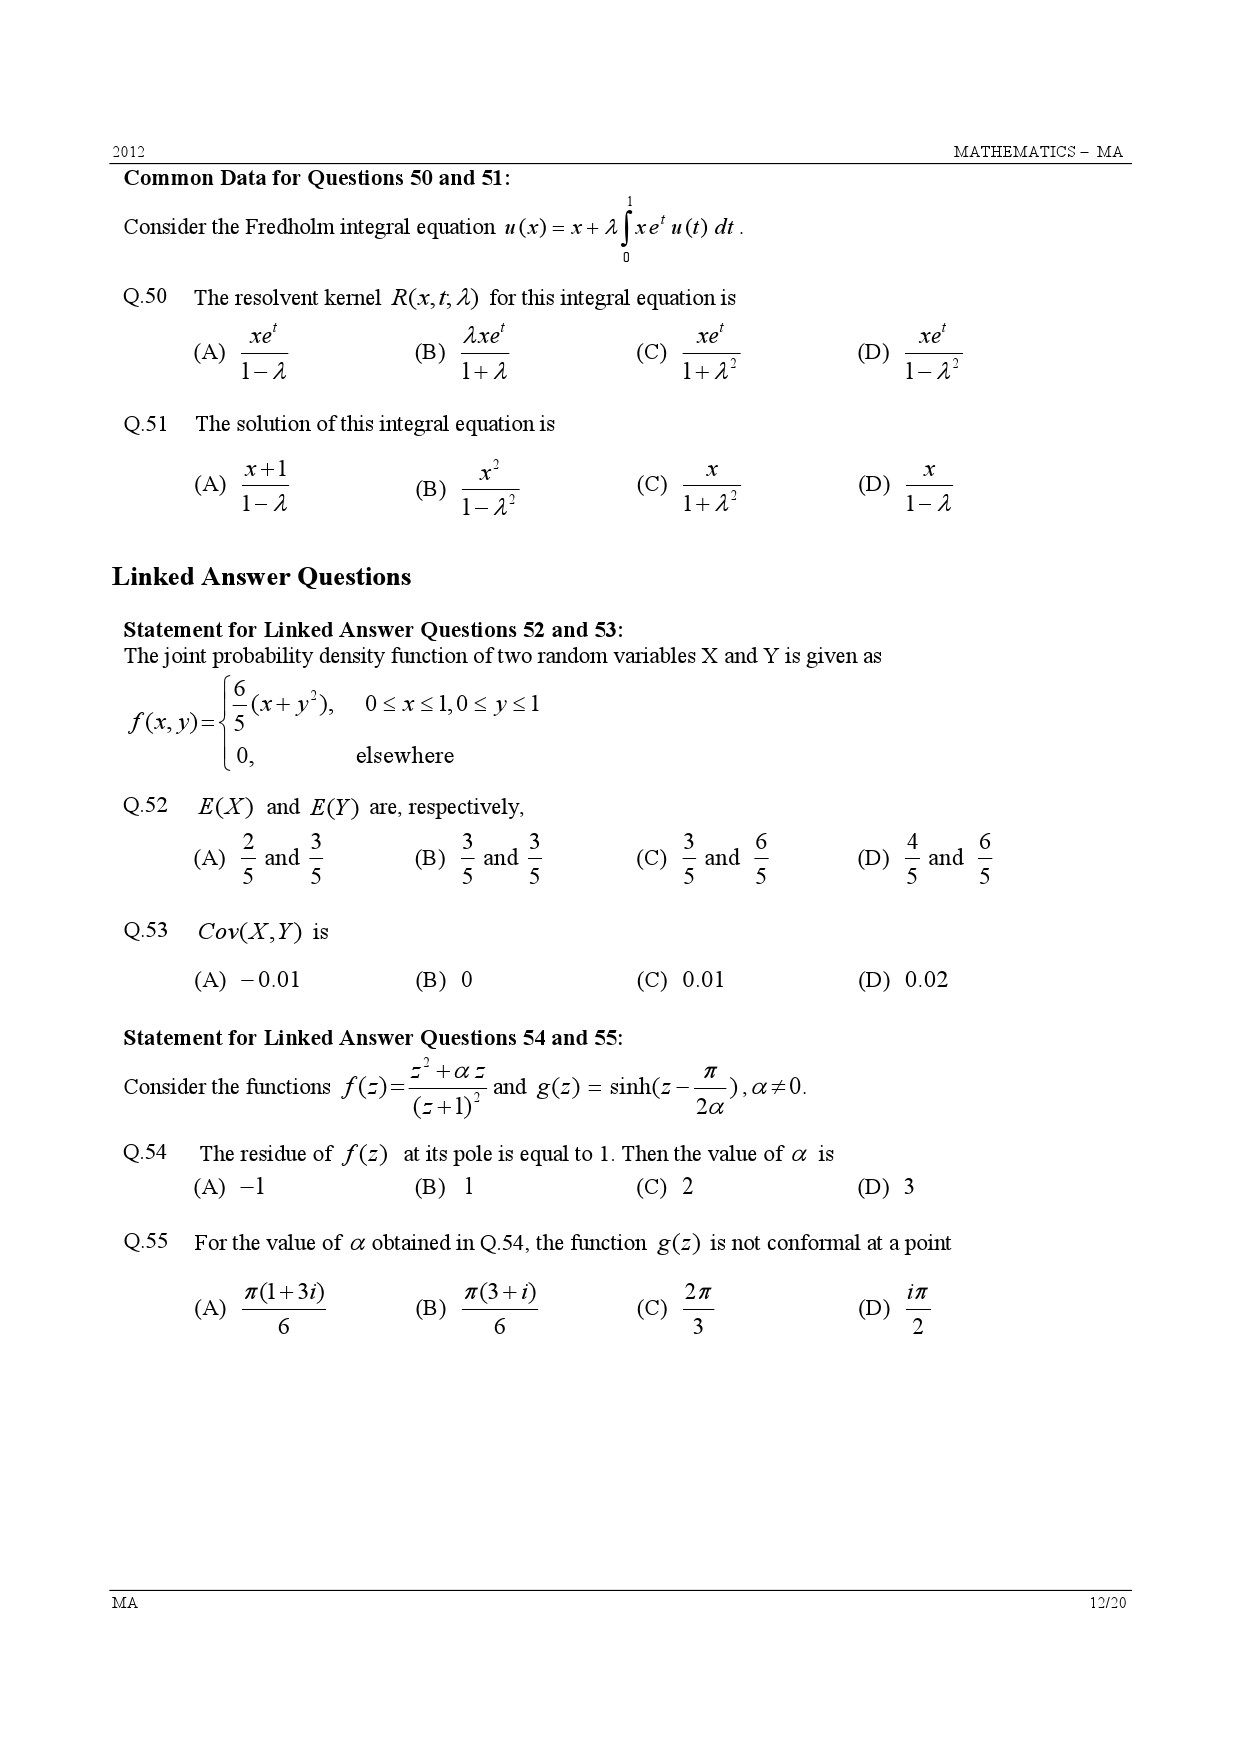 GATE Exam Question Paper 2012 Mathematics 12